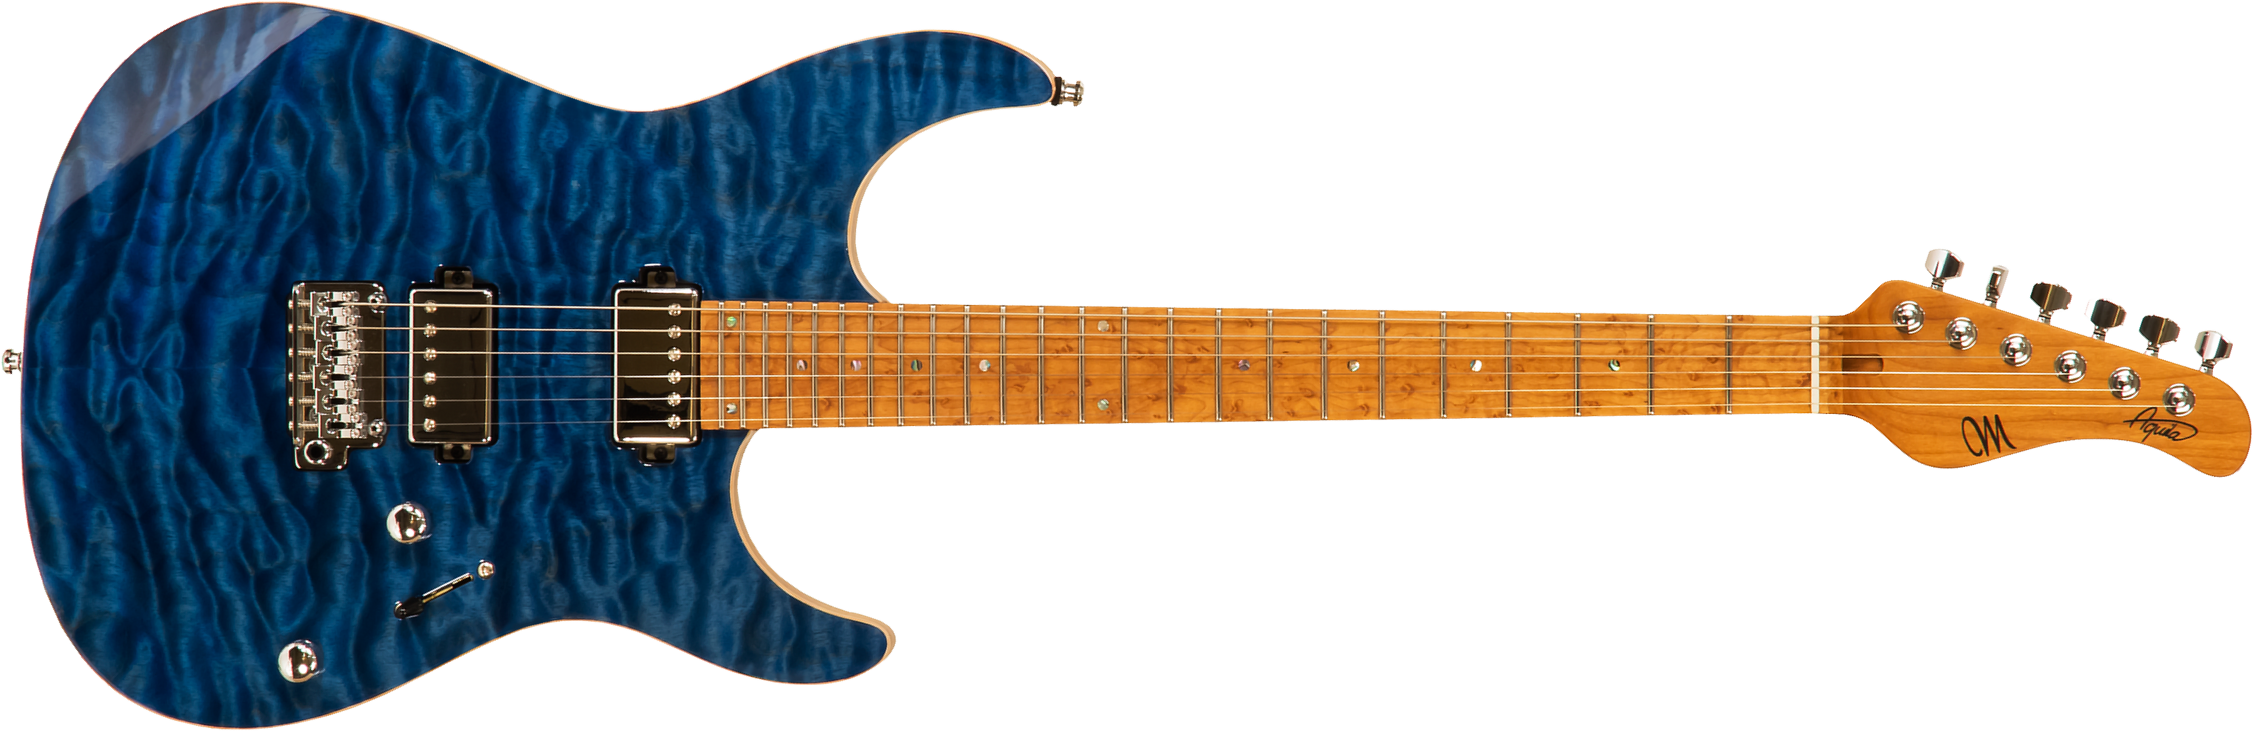 Mayones Guitars Aquila Elite S 6 40th Anniversary 2h Trem Mn #aq2204194 - Trans Blue Gloss - Guitare Électrique Forme Str - Main picture